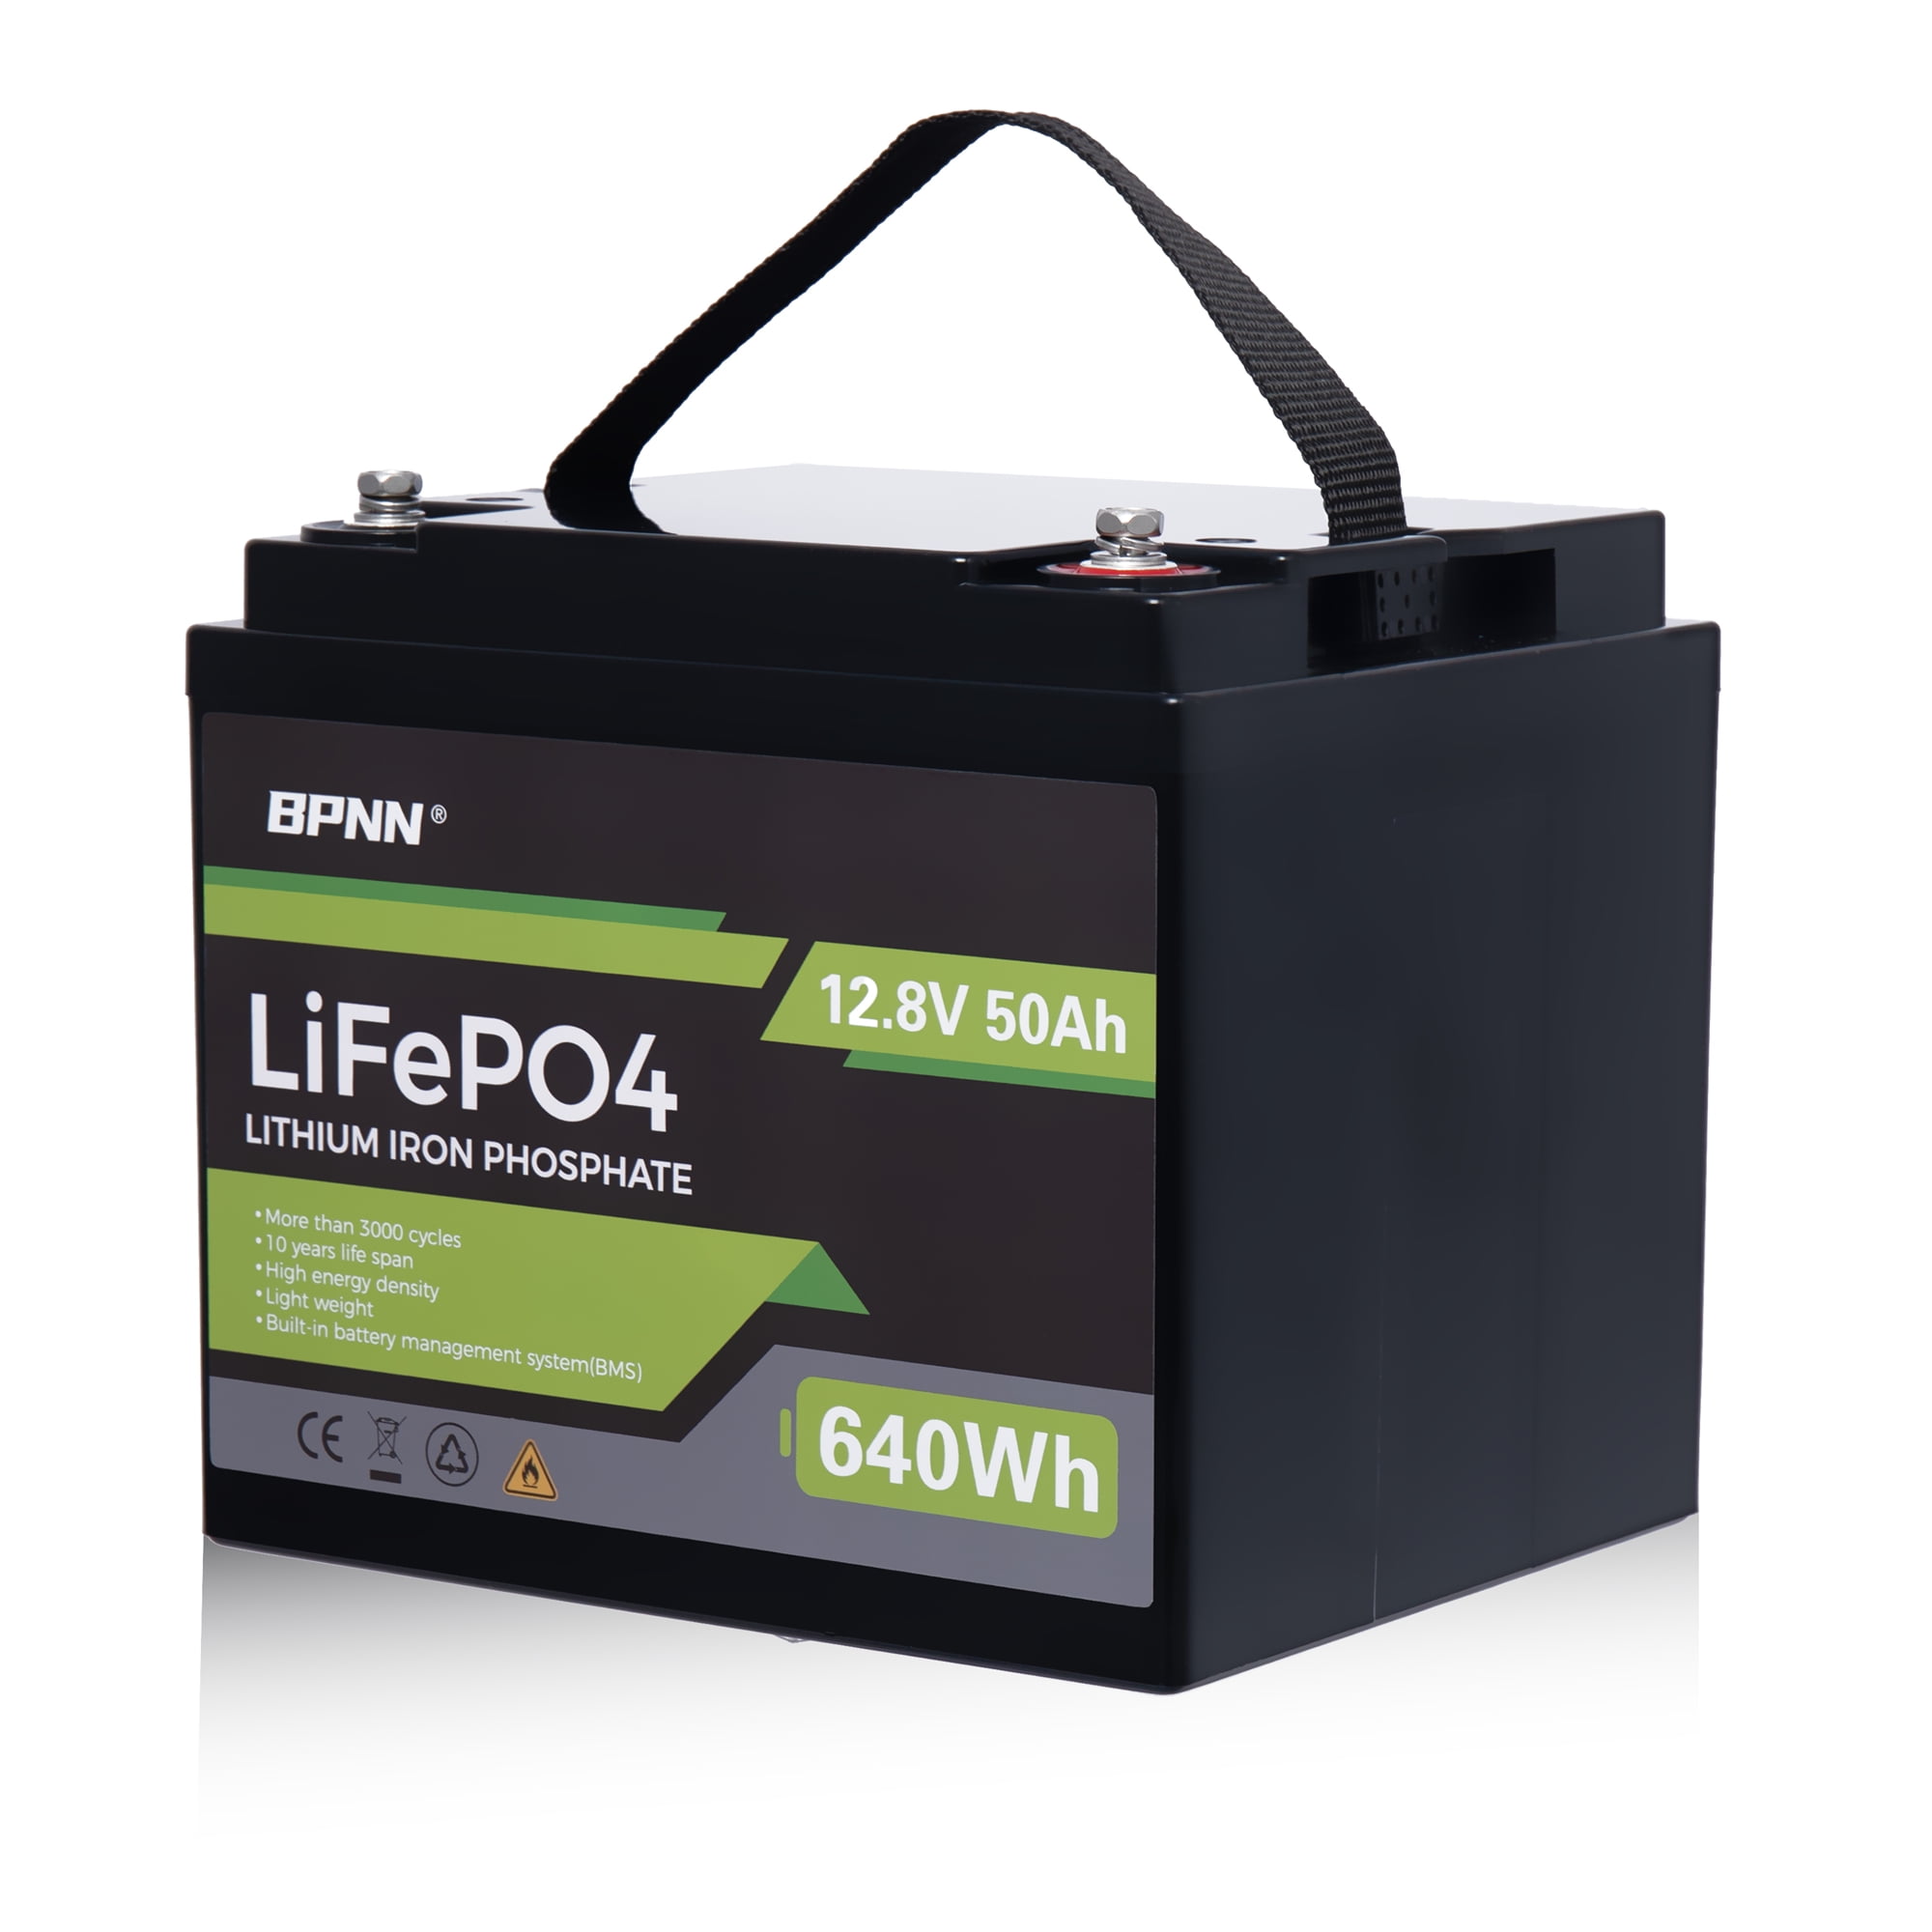 Halix Lithium Iron Phosphate LiFePo4 48V 50AH LiFePO4 Battery at